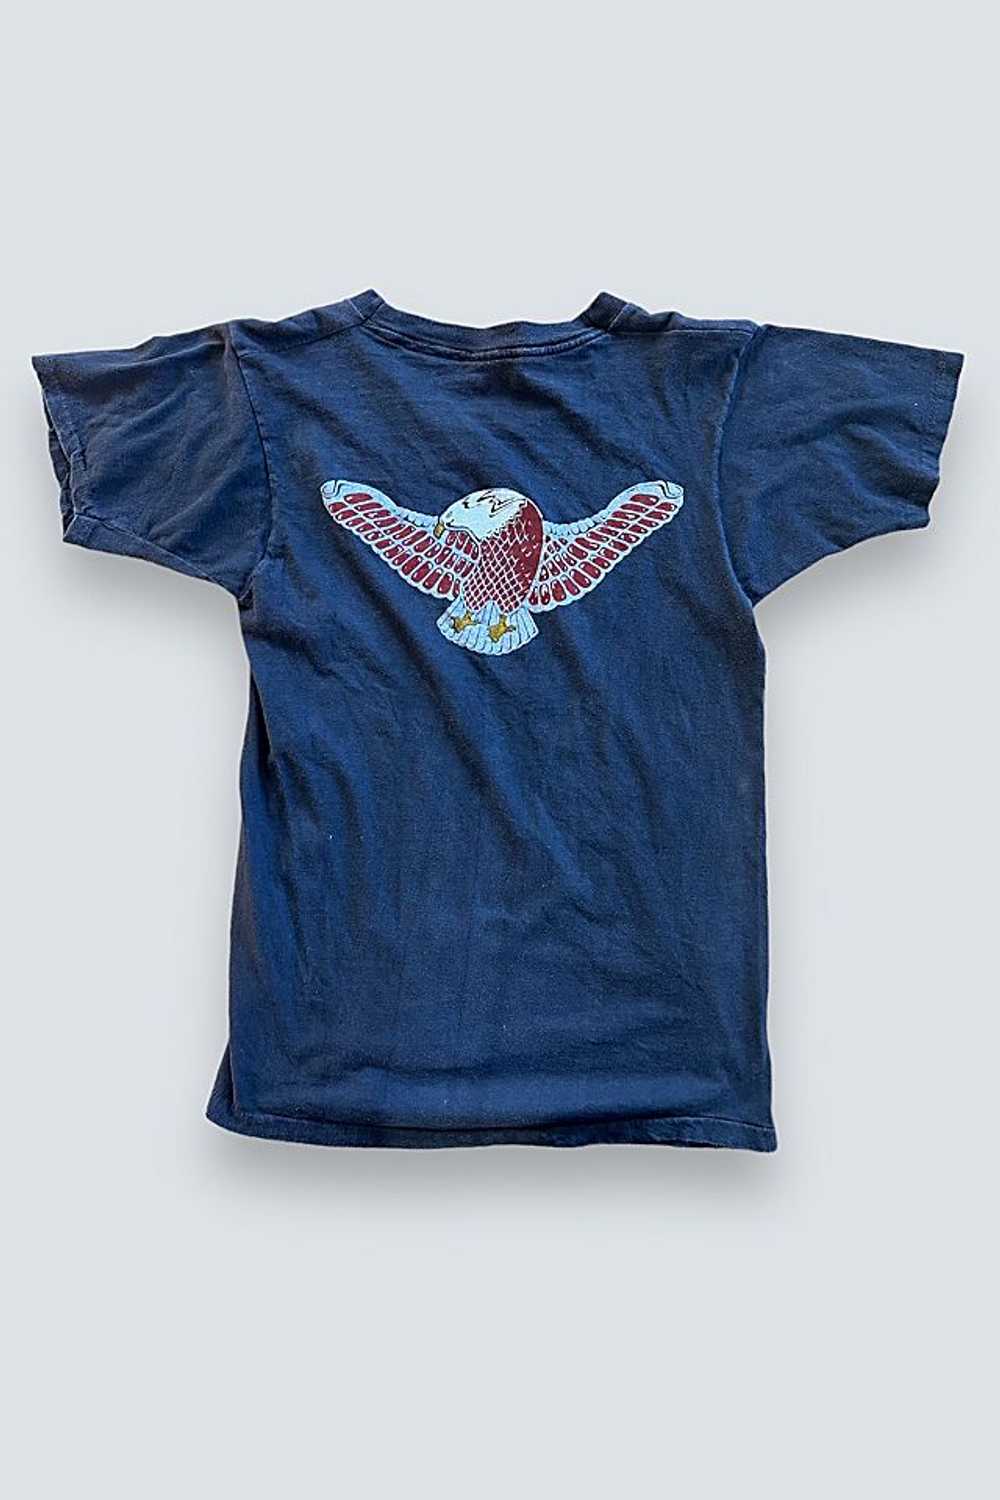 Wayne Newton Vintage T-Shirt Selected by Goodbye … - image 3